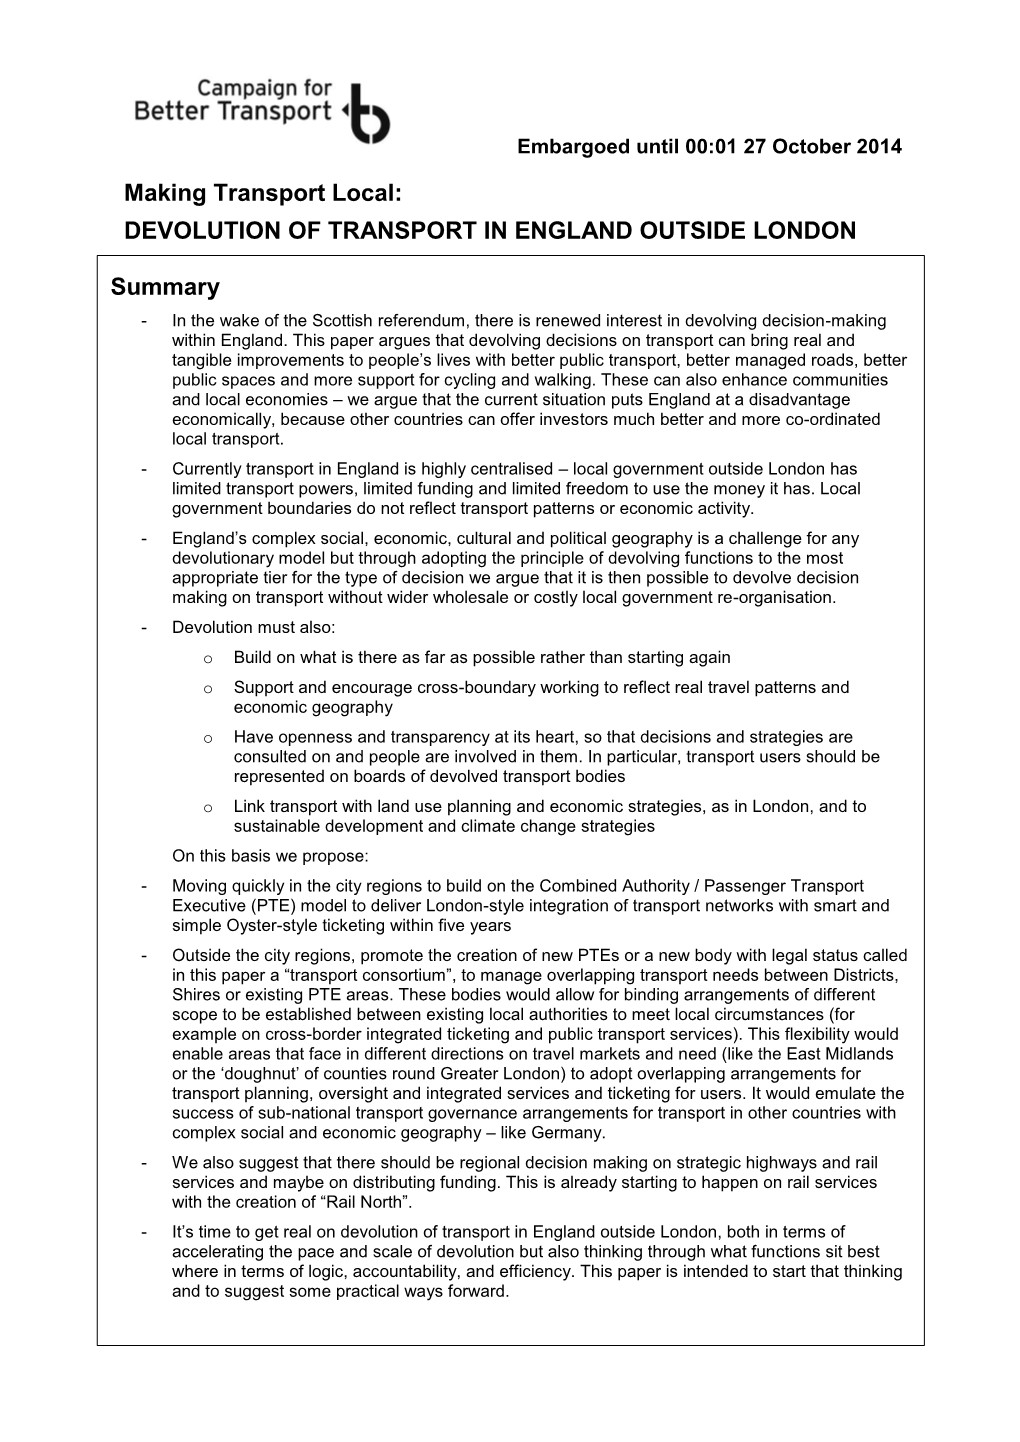 Devolution of Transport in England Outside London